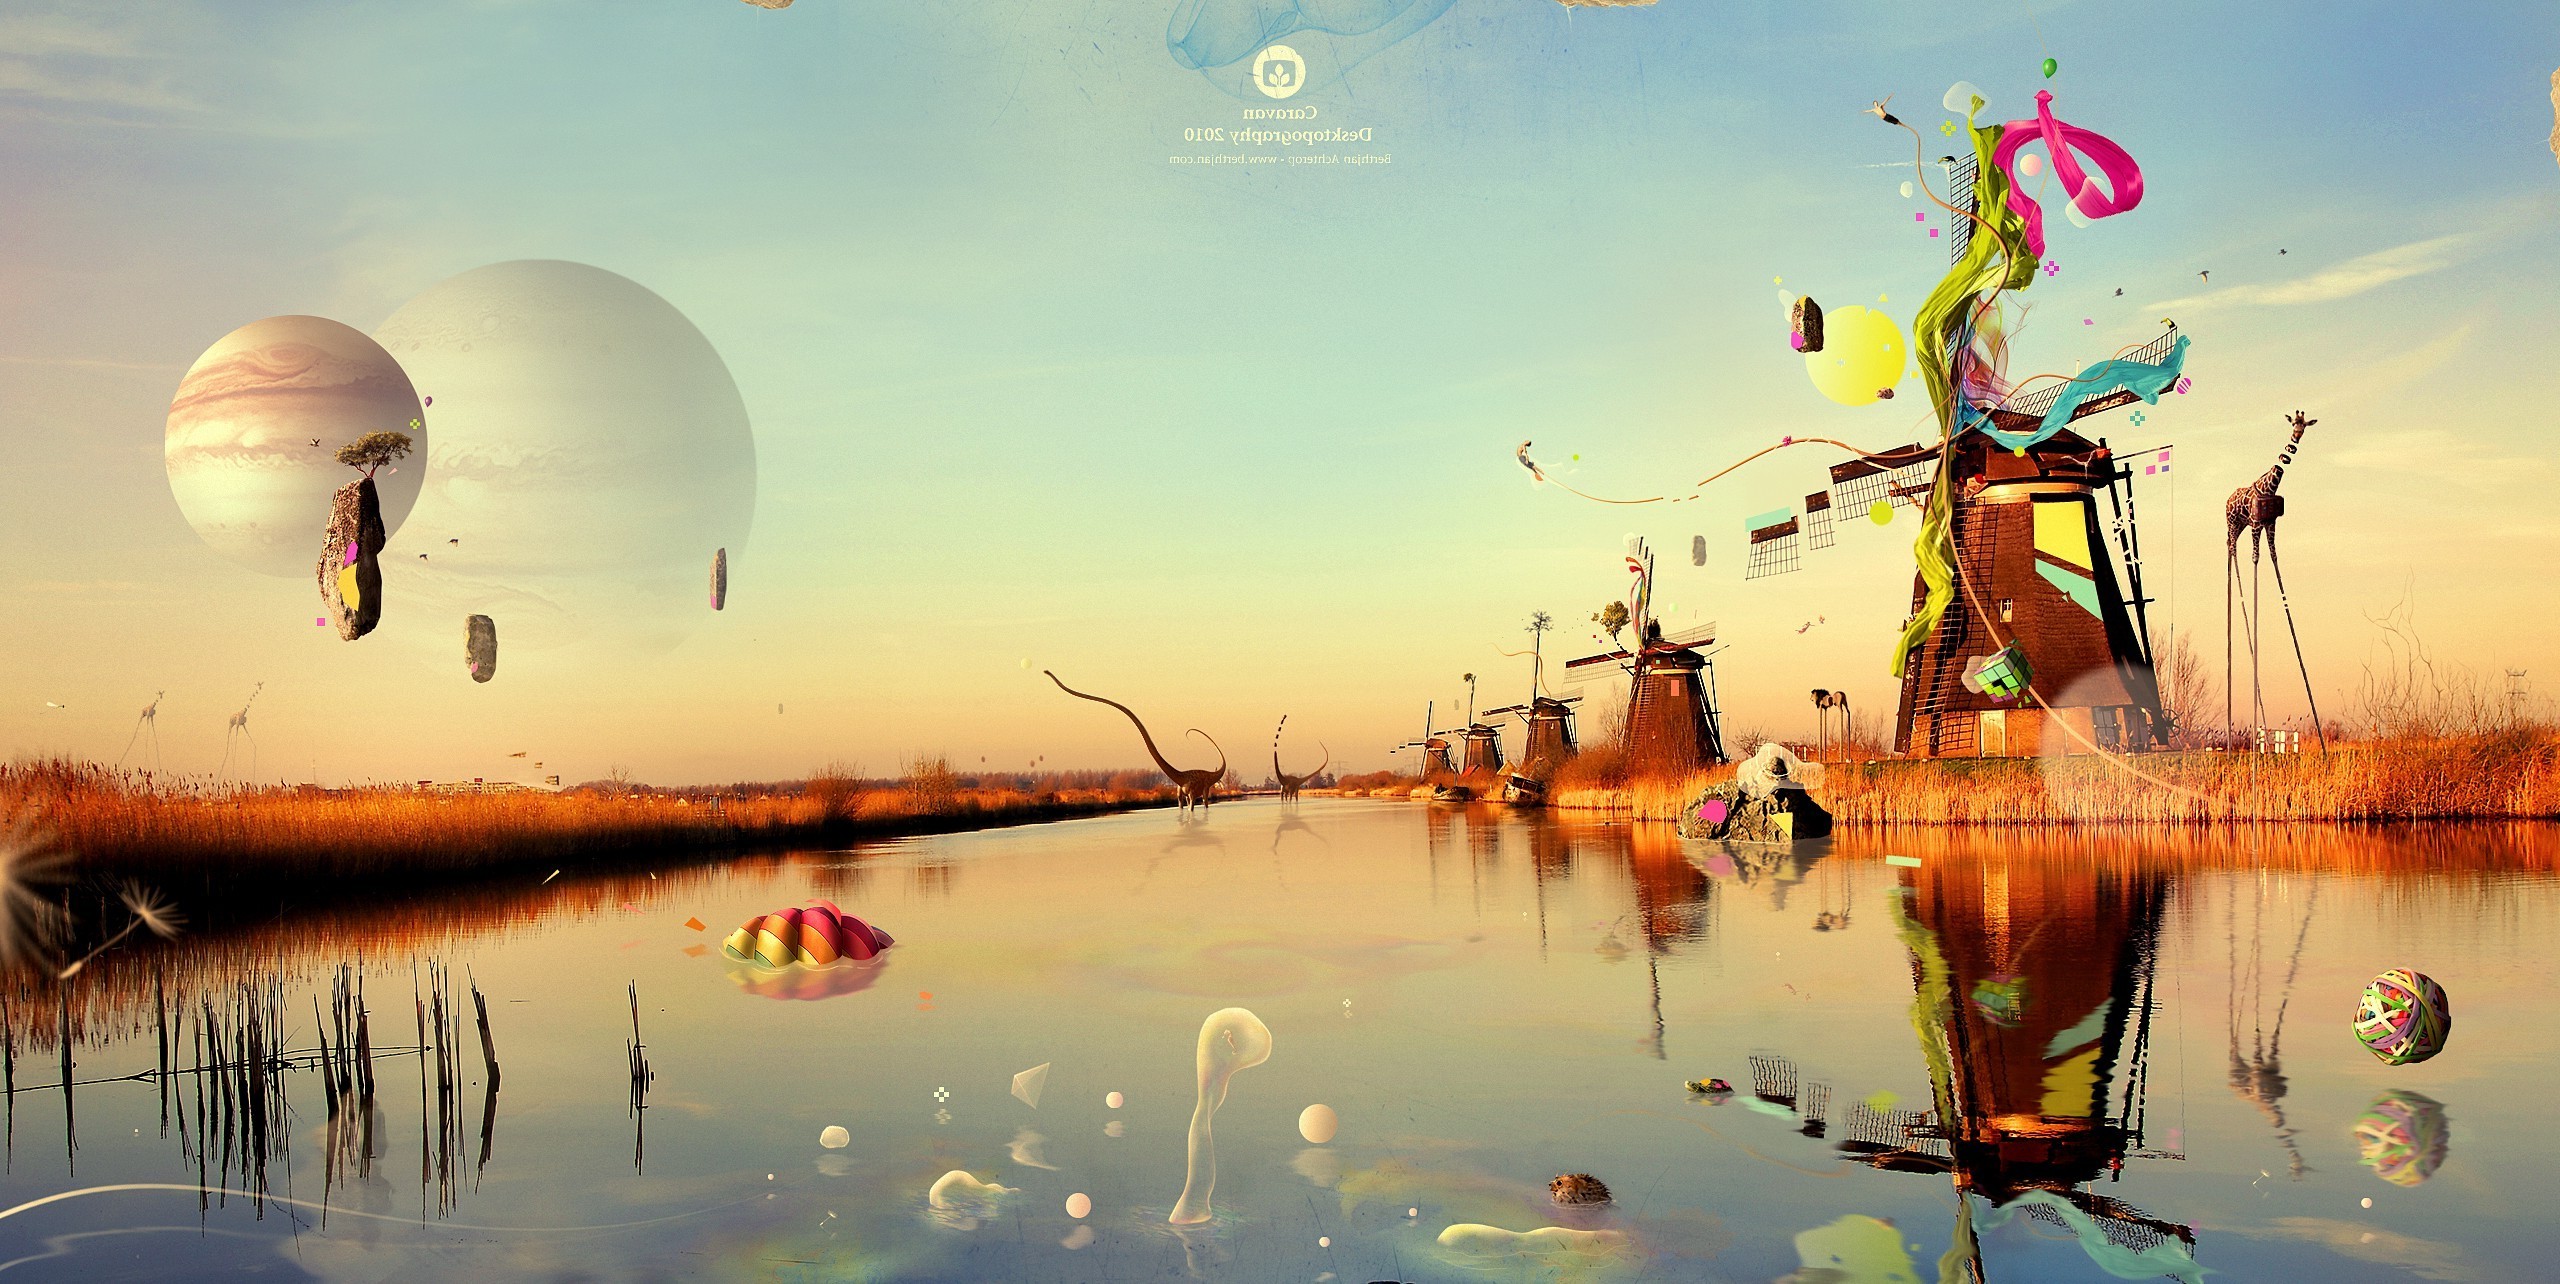 Desktopography, Surreal, Windmills, Water, Reflection, Giraffes, Planet Wallpaper